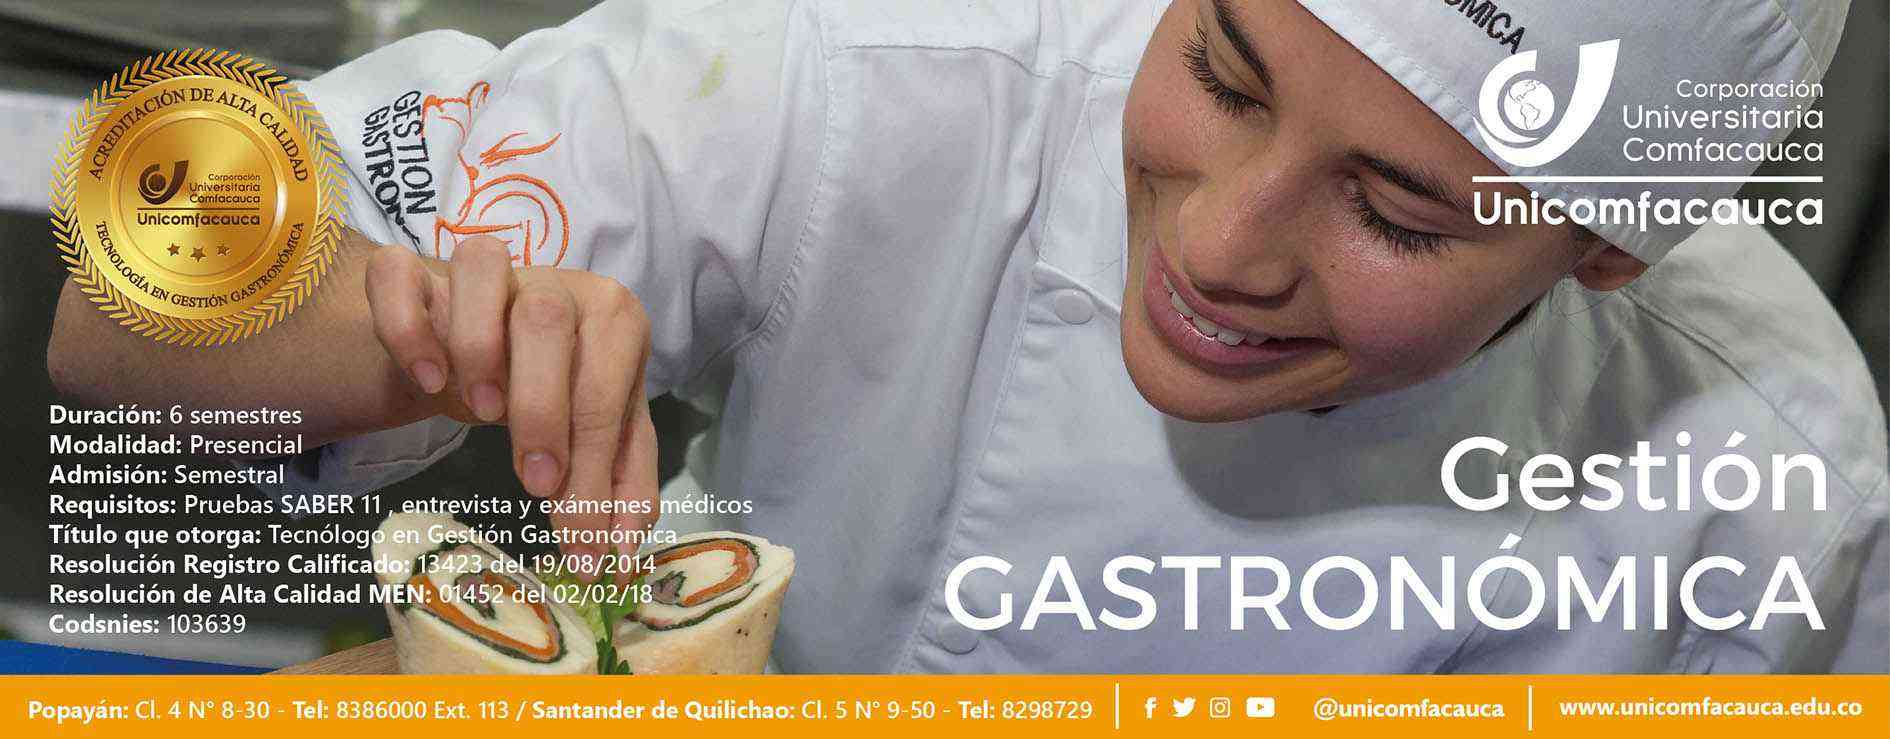 Gestion Gastronomica 01